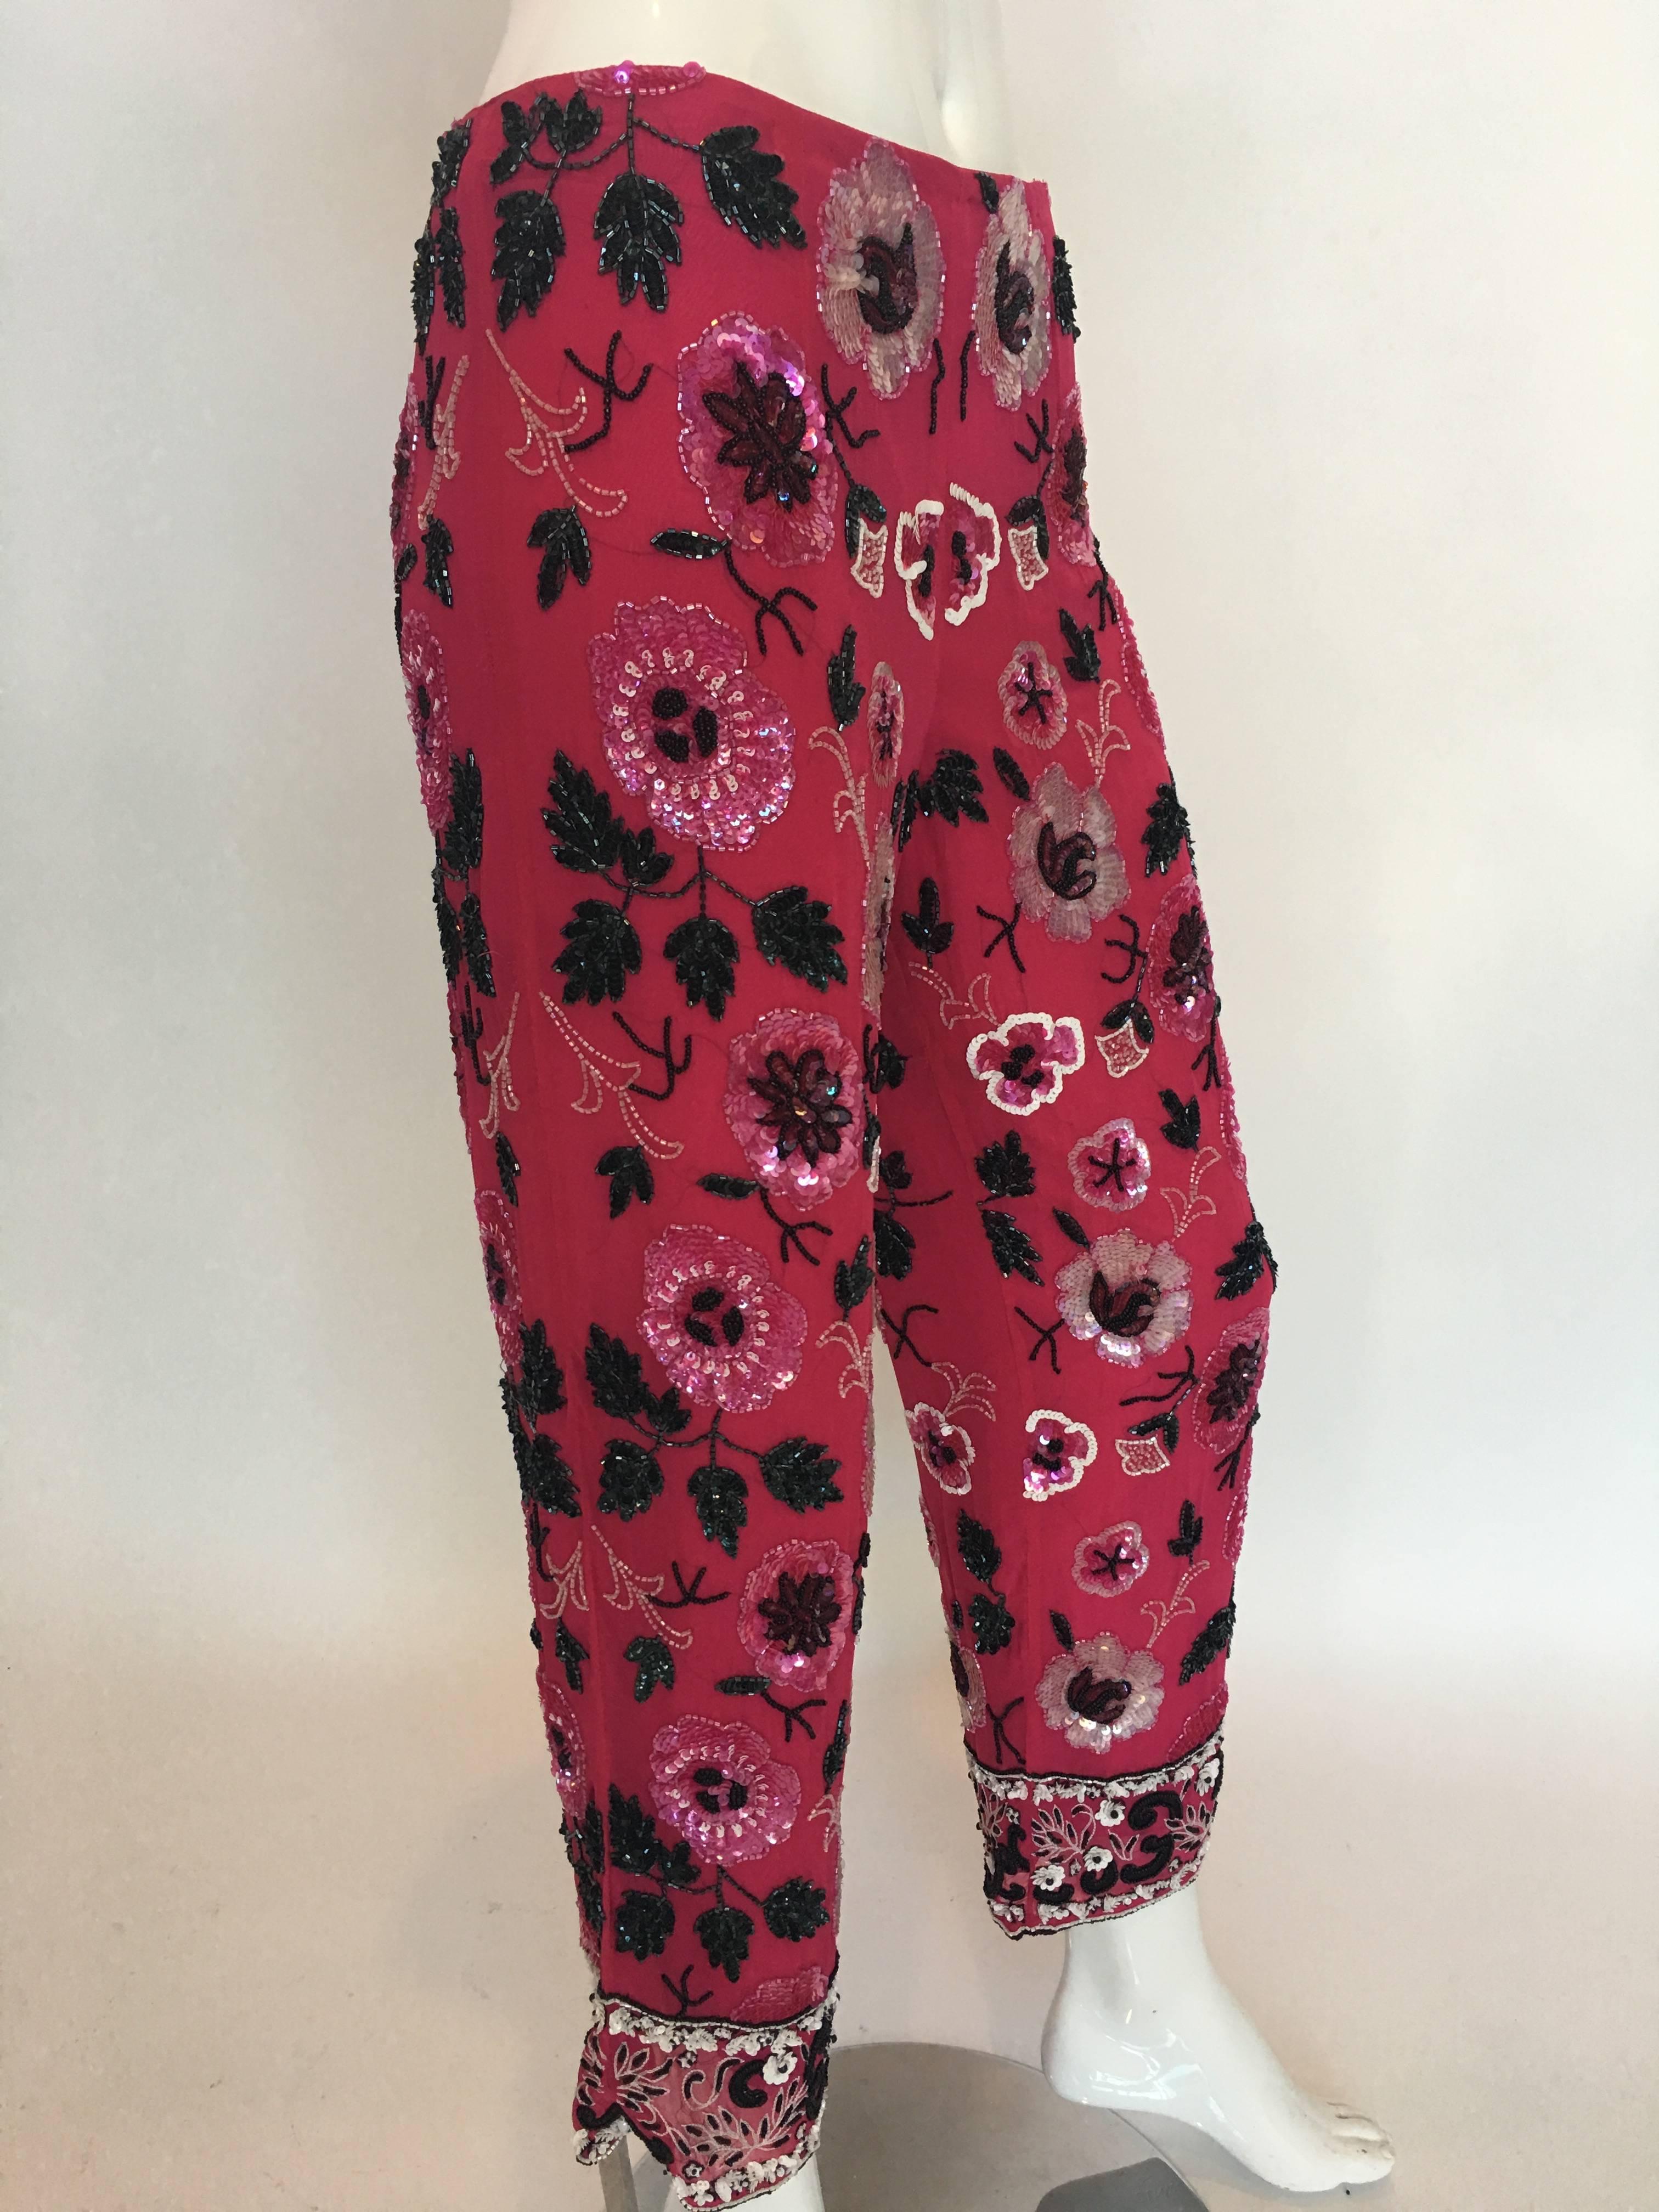 1980s Cache Fuschia Floral Beaded Silk Cropped Lounge Pants

Measurements - taken flat:
Waist: 14